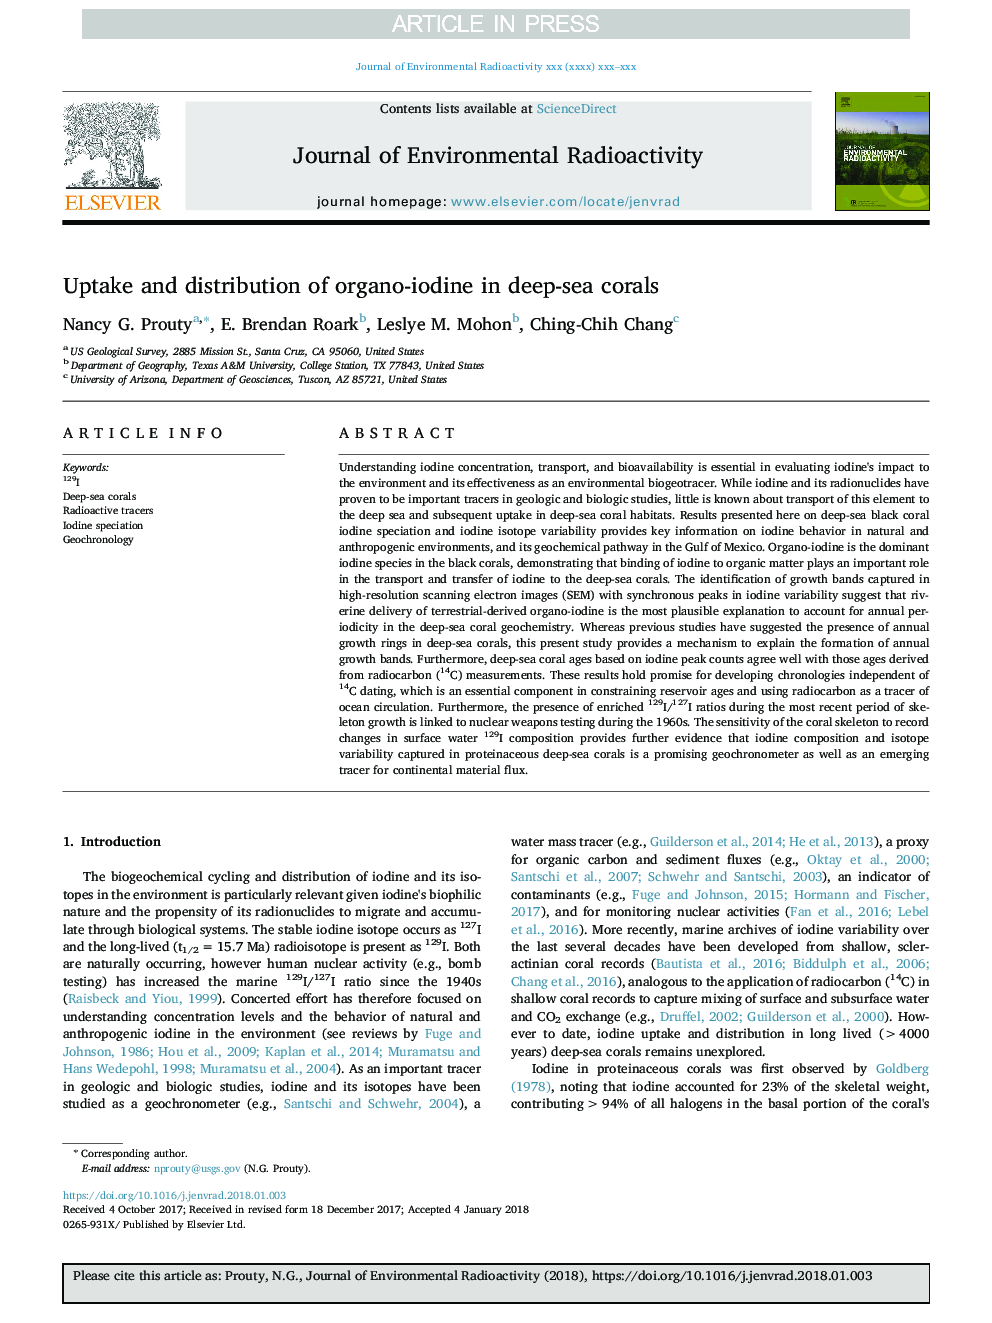 Uptake and distribution of organo-iodine in deep-sea corals